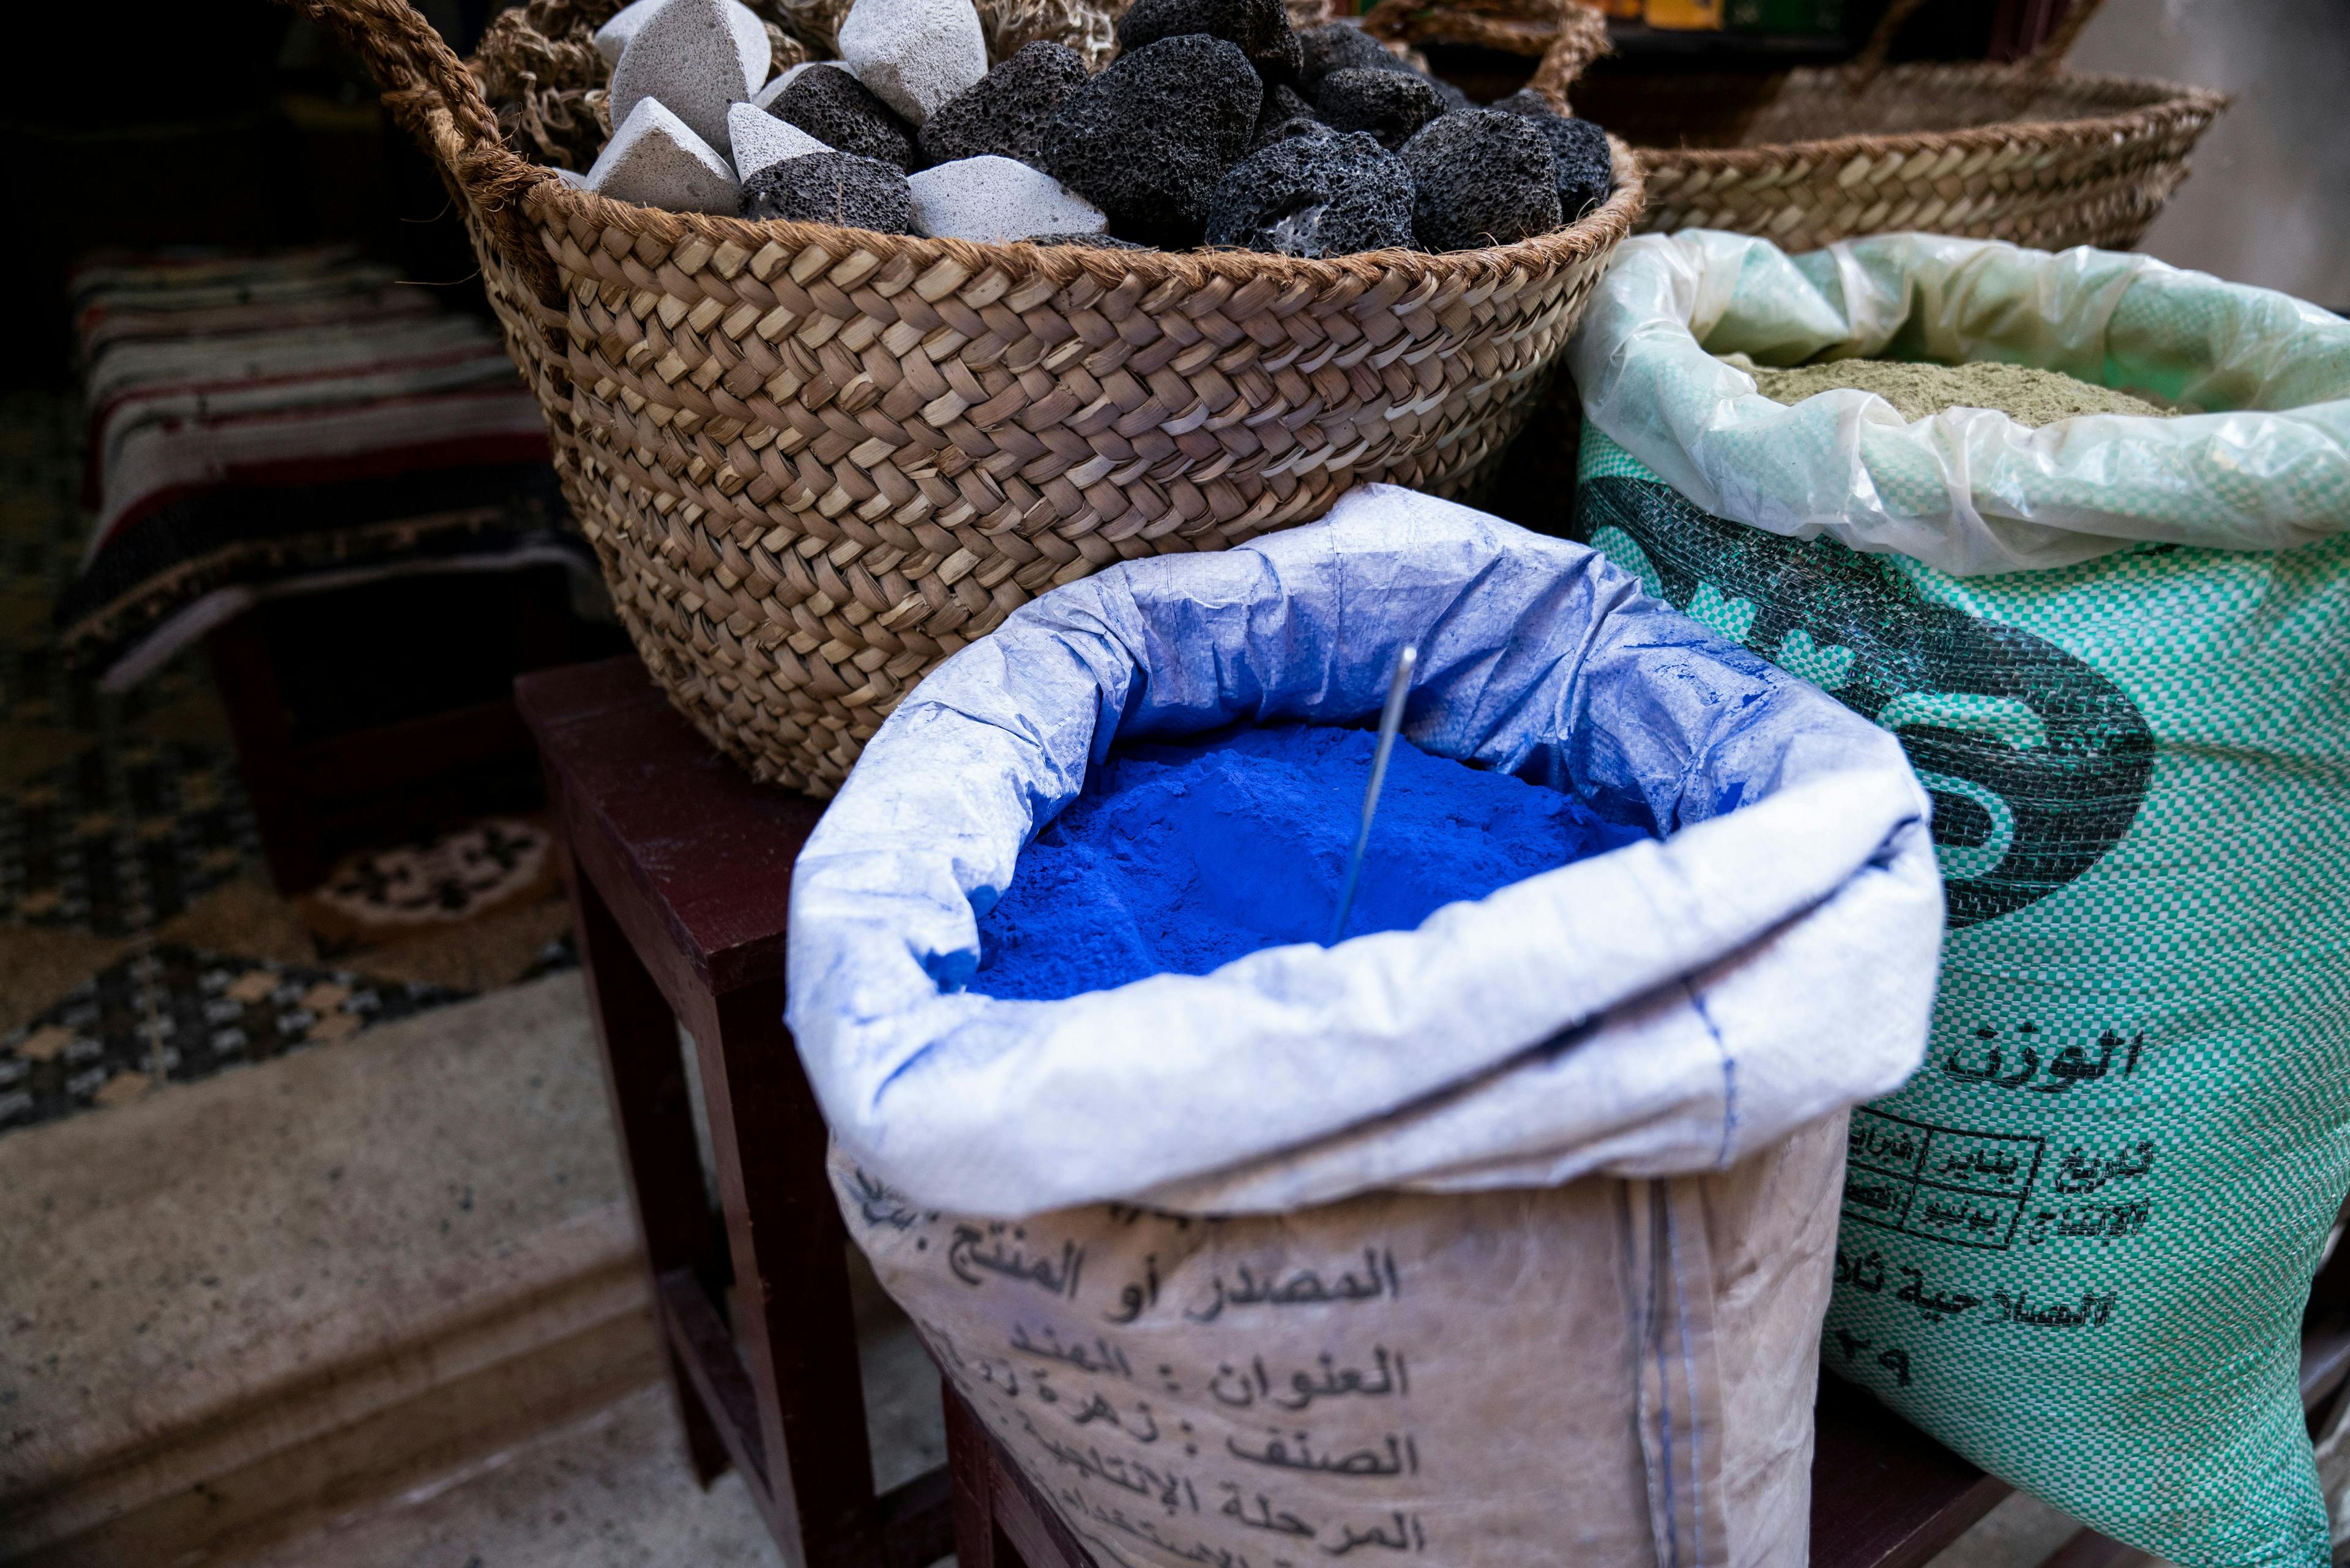 Blue Paint pigment at an Egyptian outdoor market | Image Credit: © Cavan - stock.adobe.com